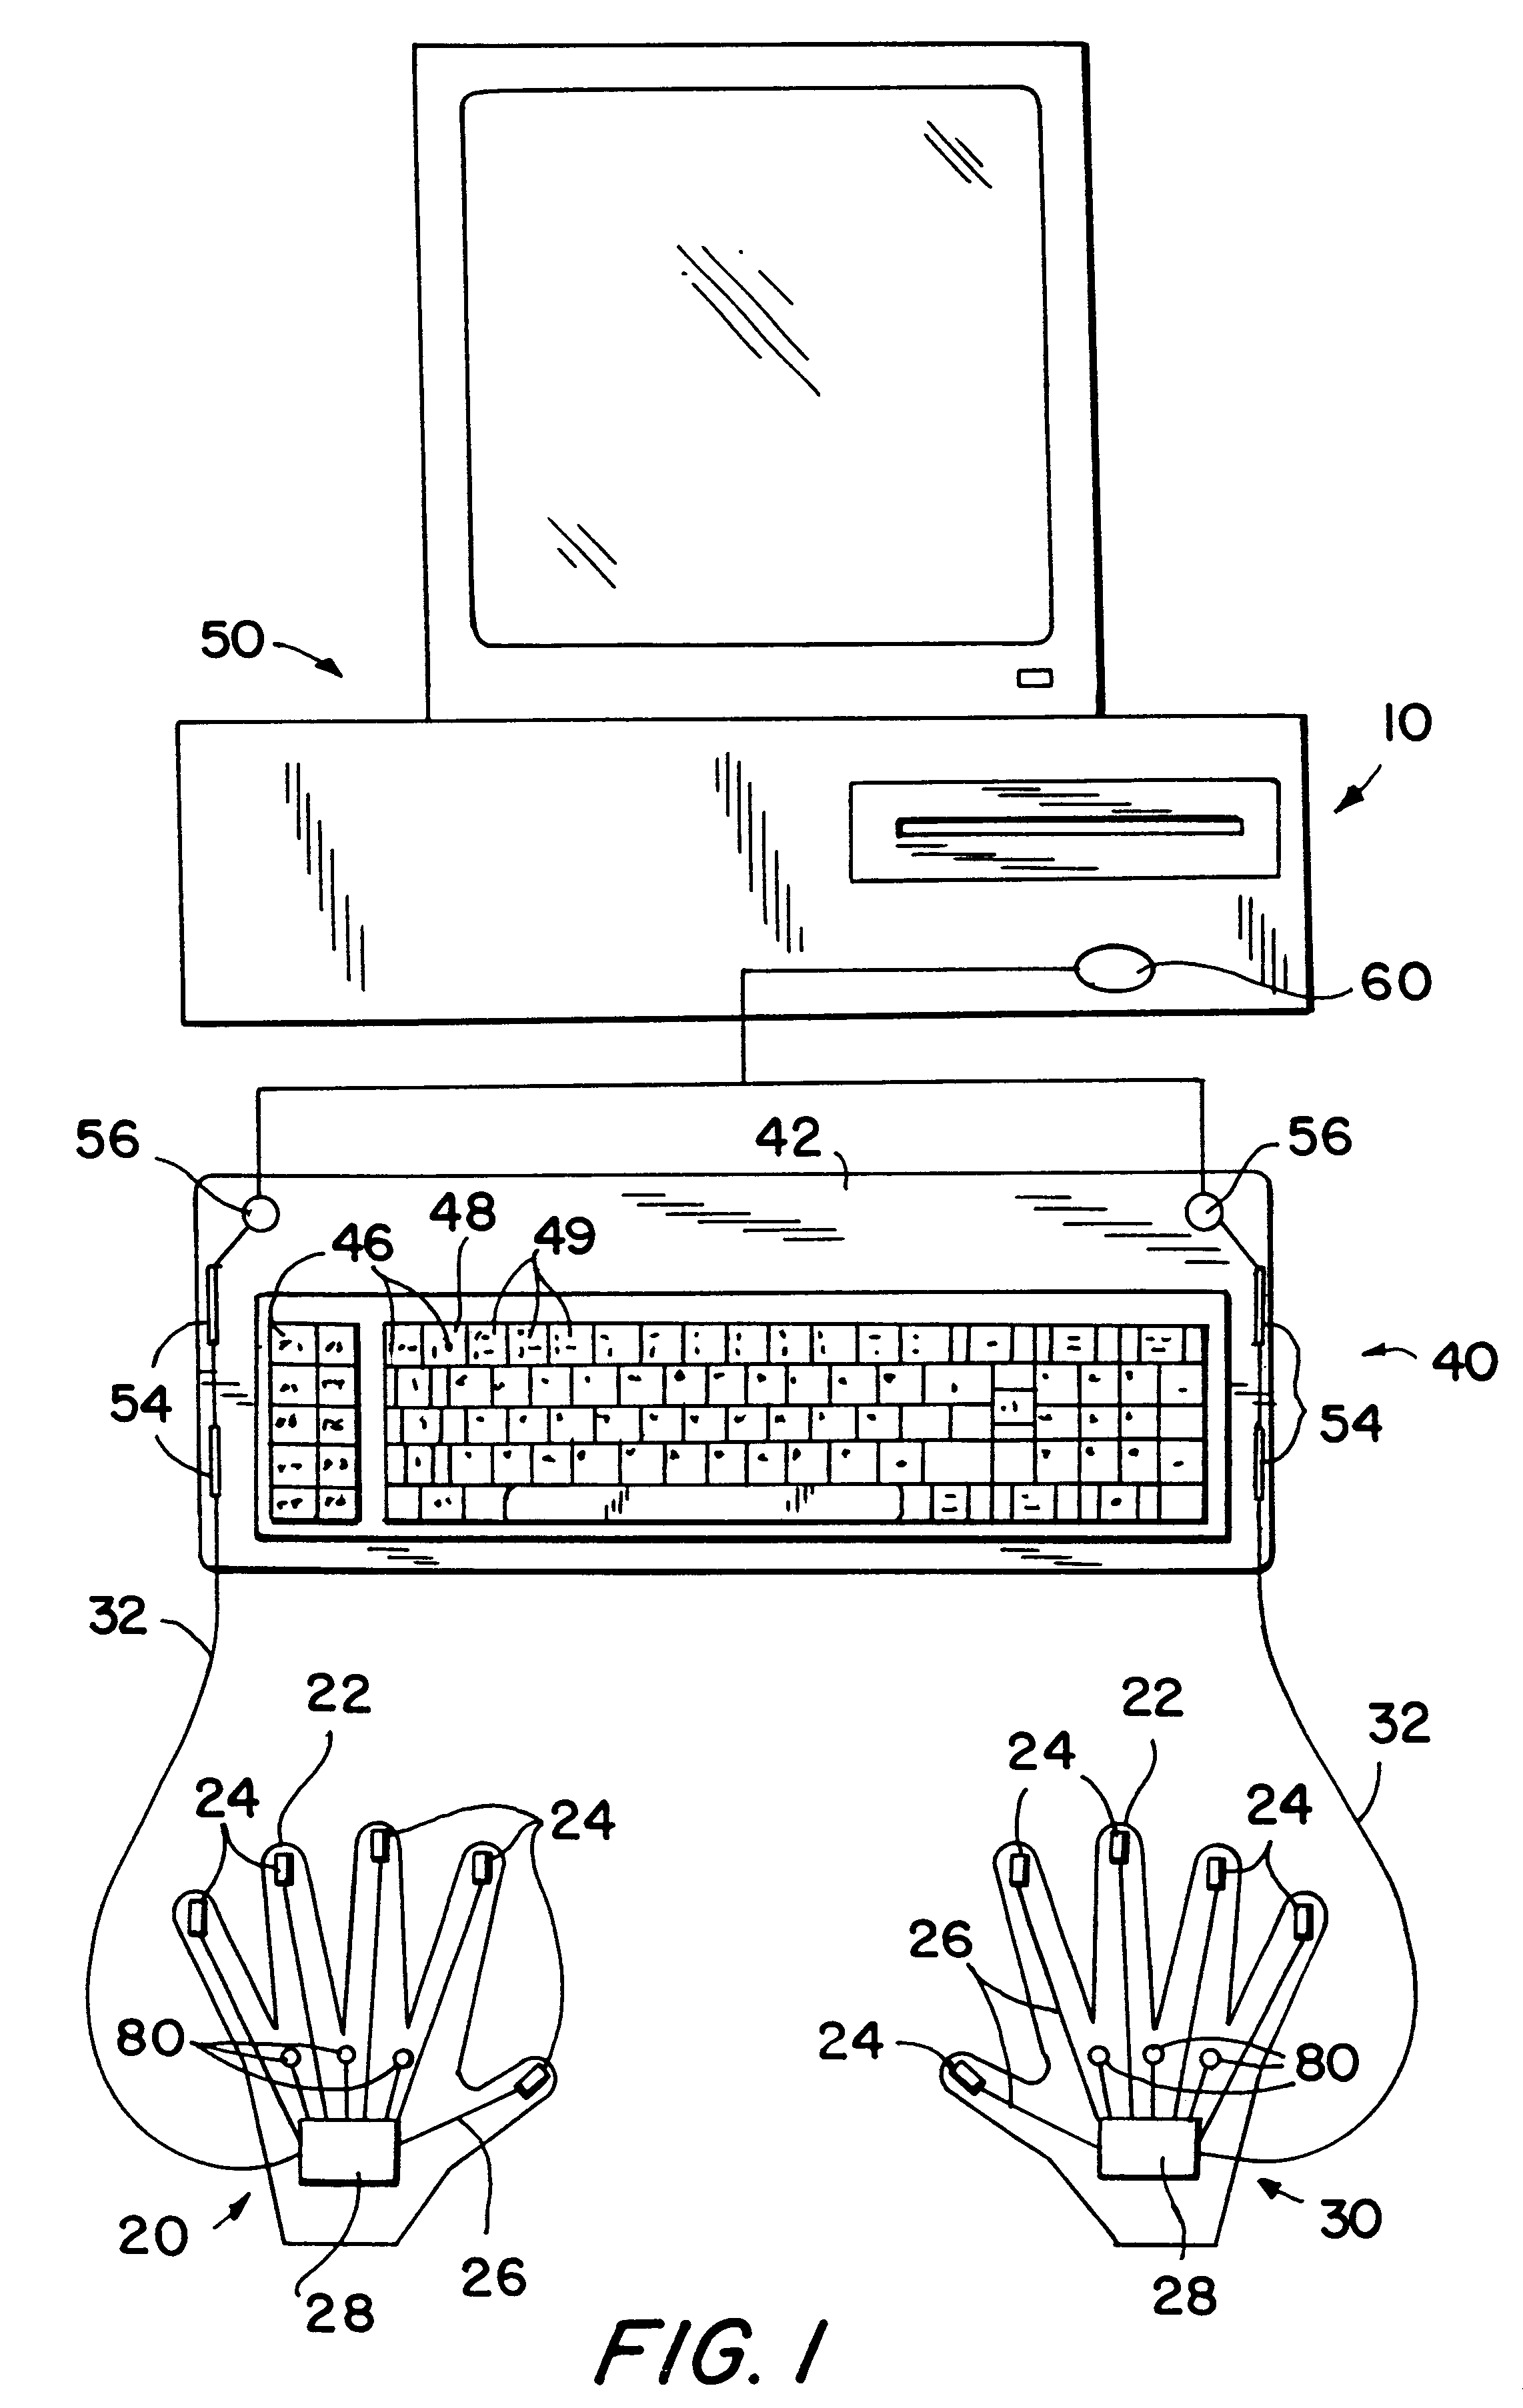 Data input device